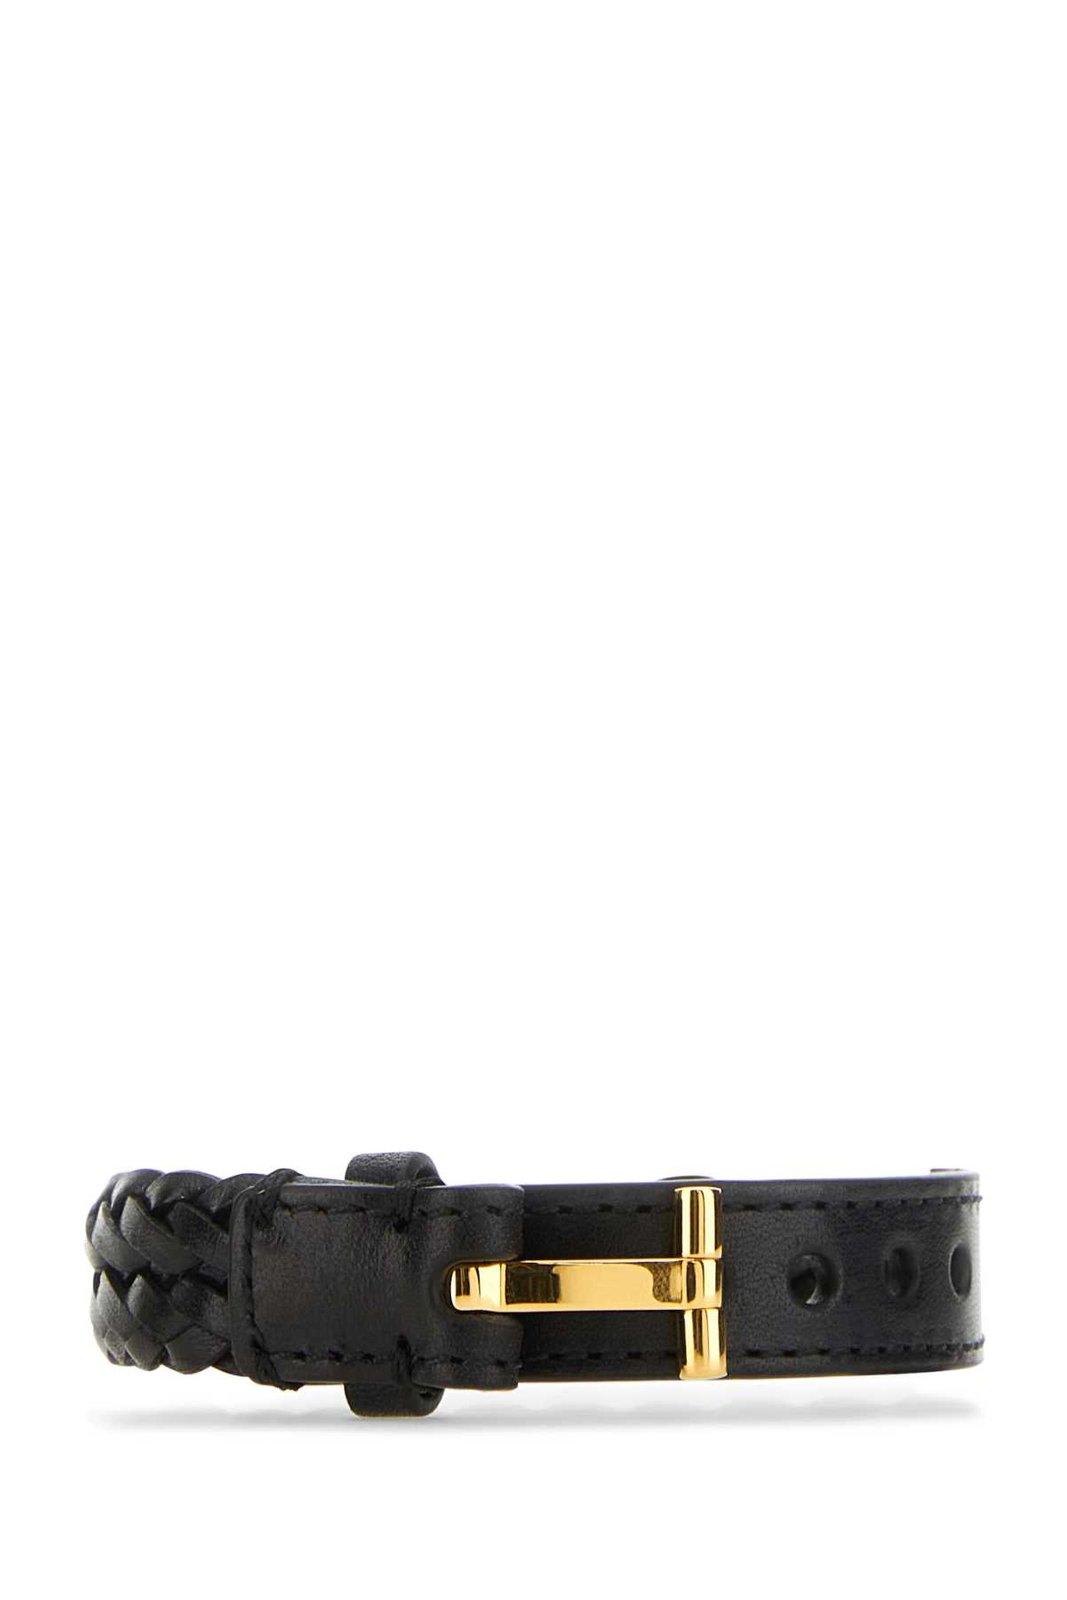 T-lock Leather Bracelet